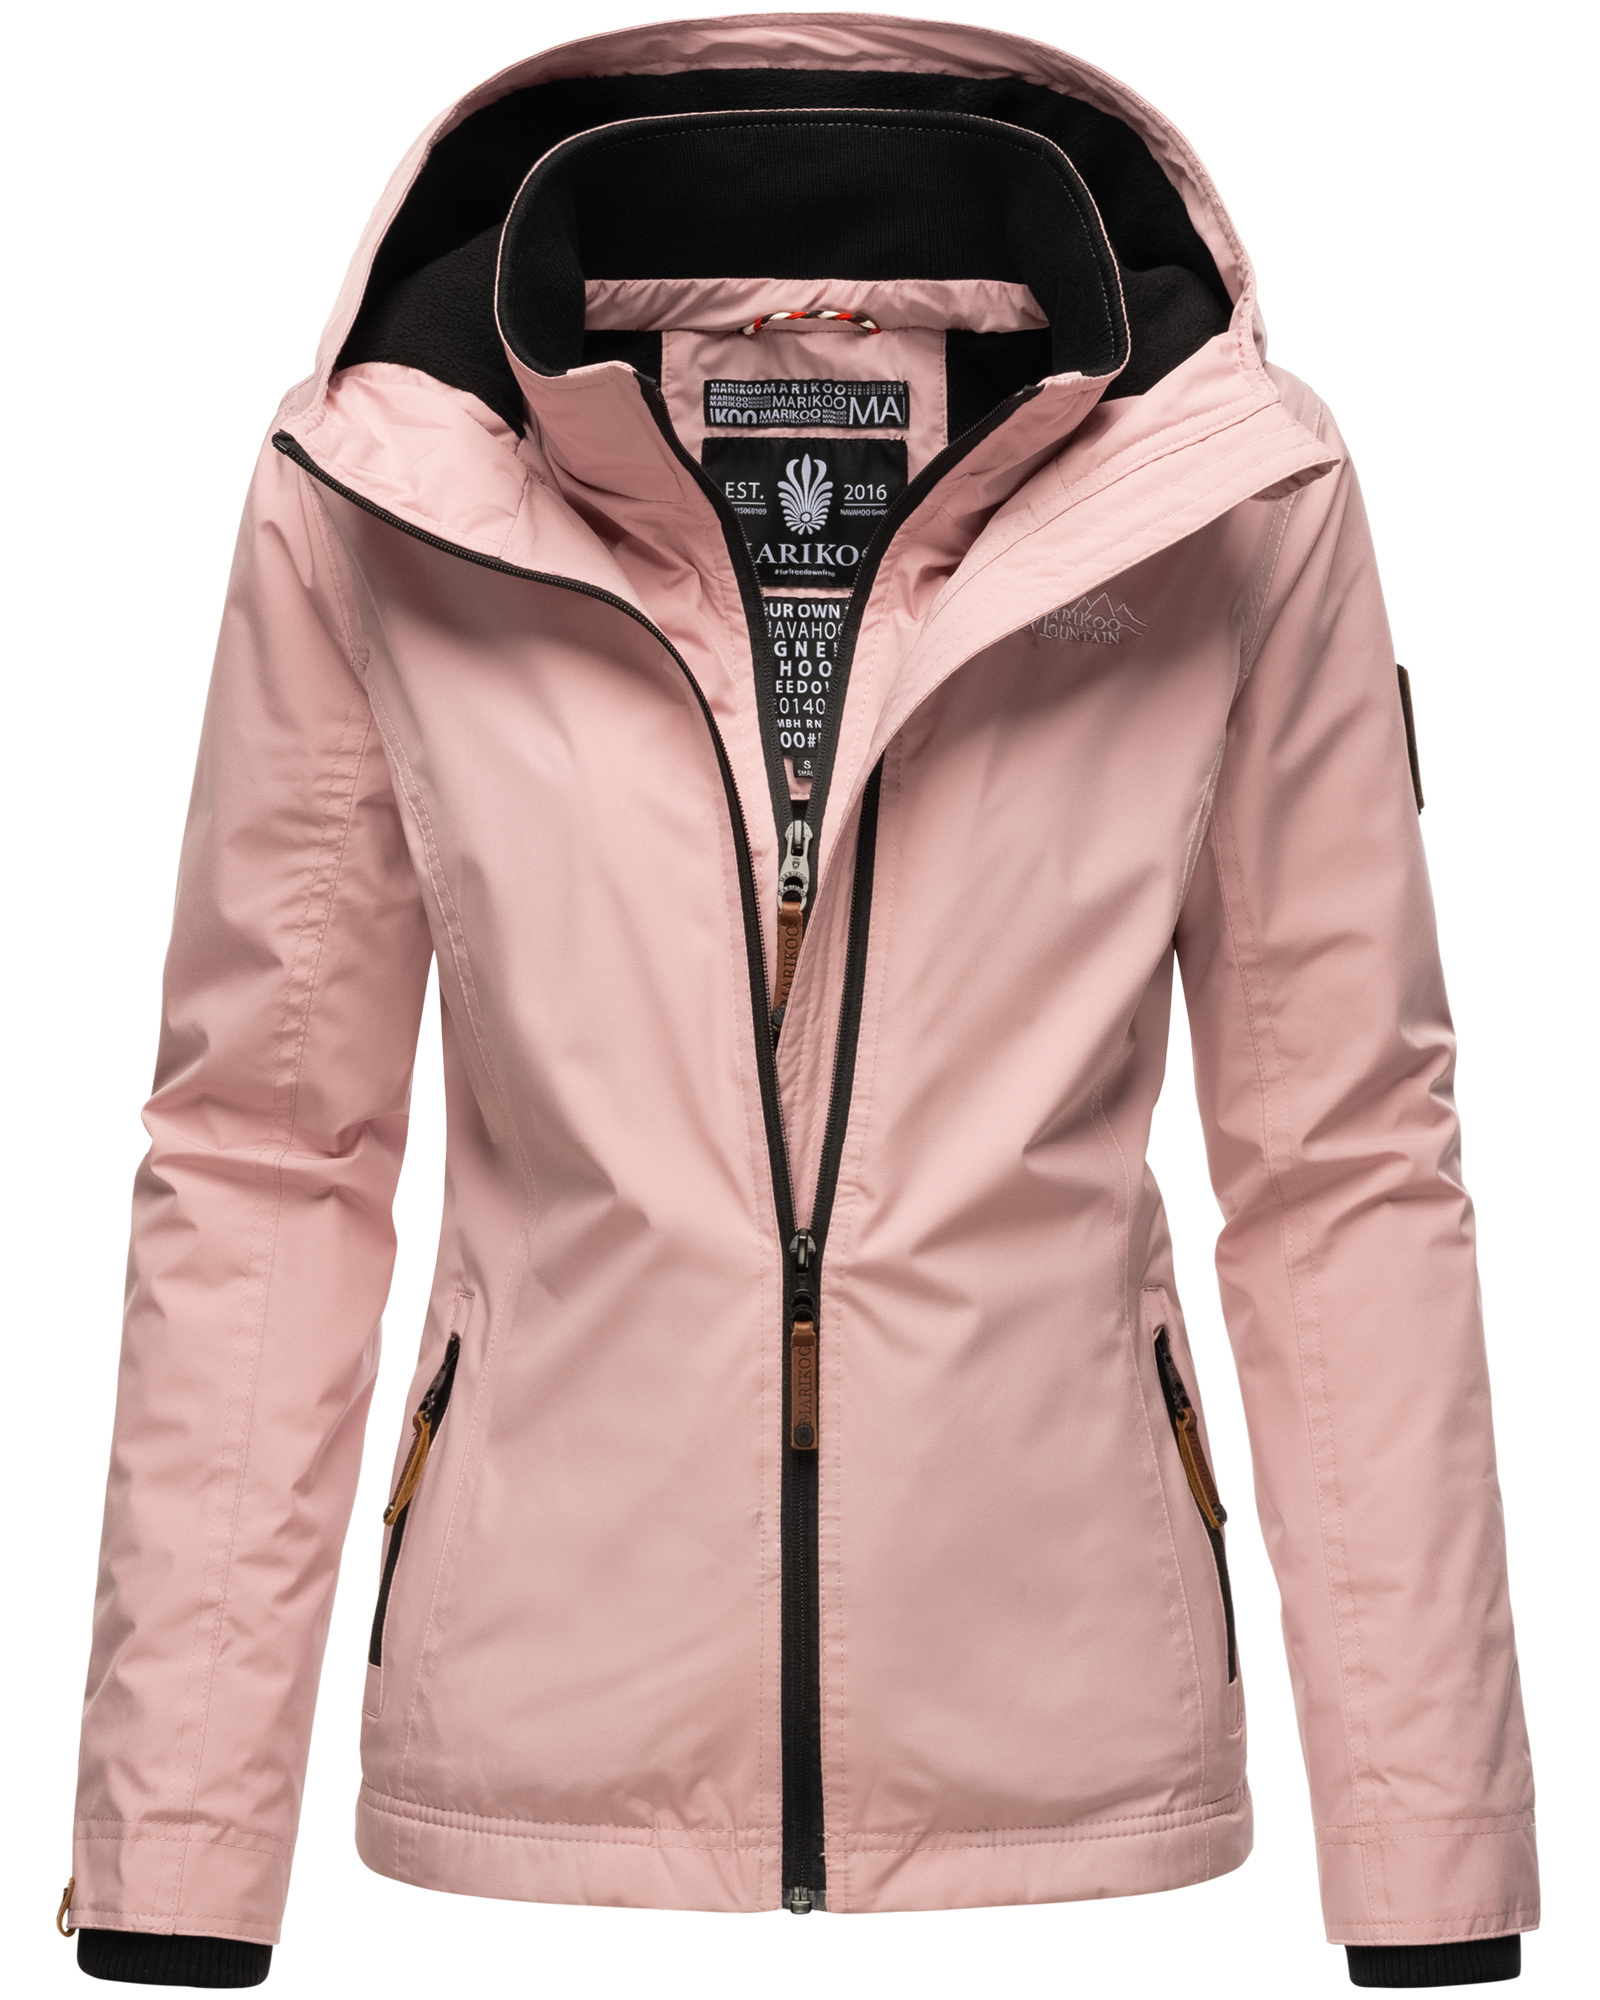 Dámská outdoorová bunda s kapucí Erdbeere Marikoo - POWDER ROSE Velikost: XXL